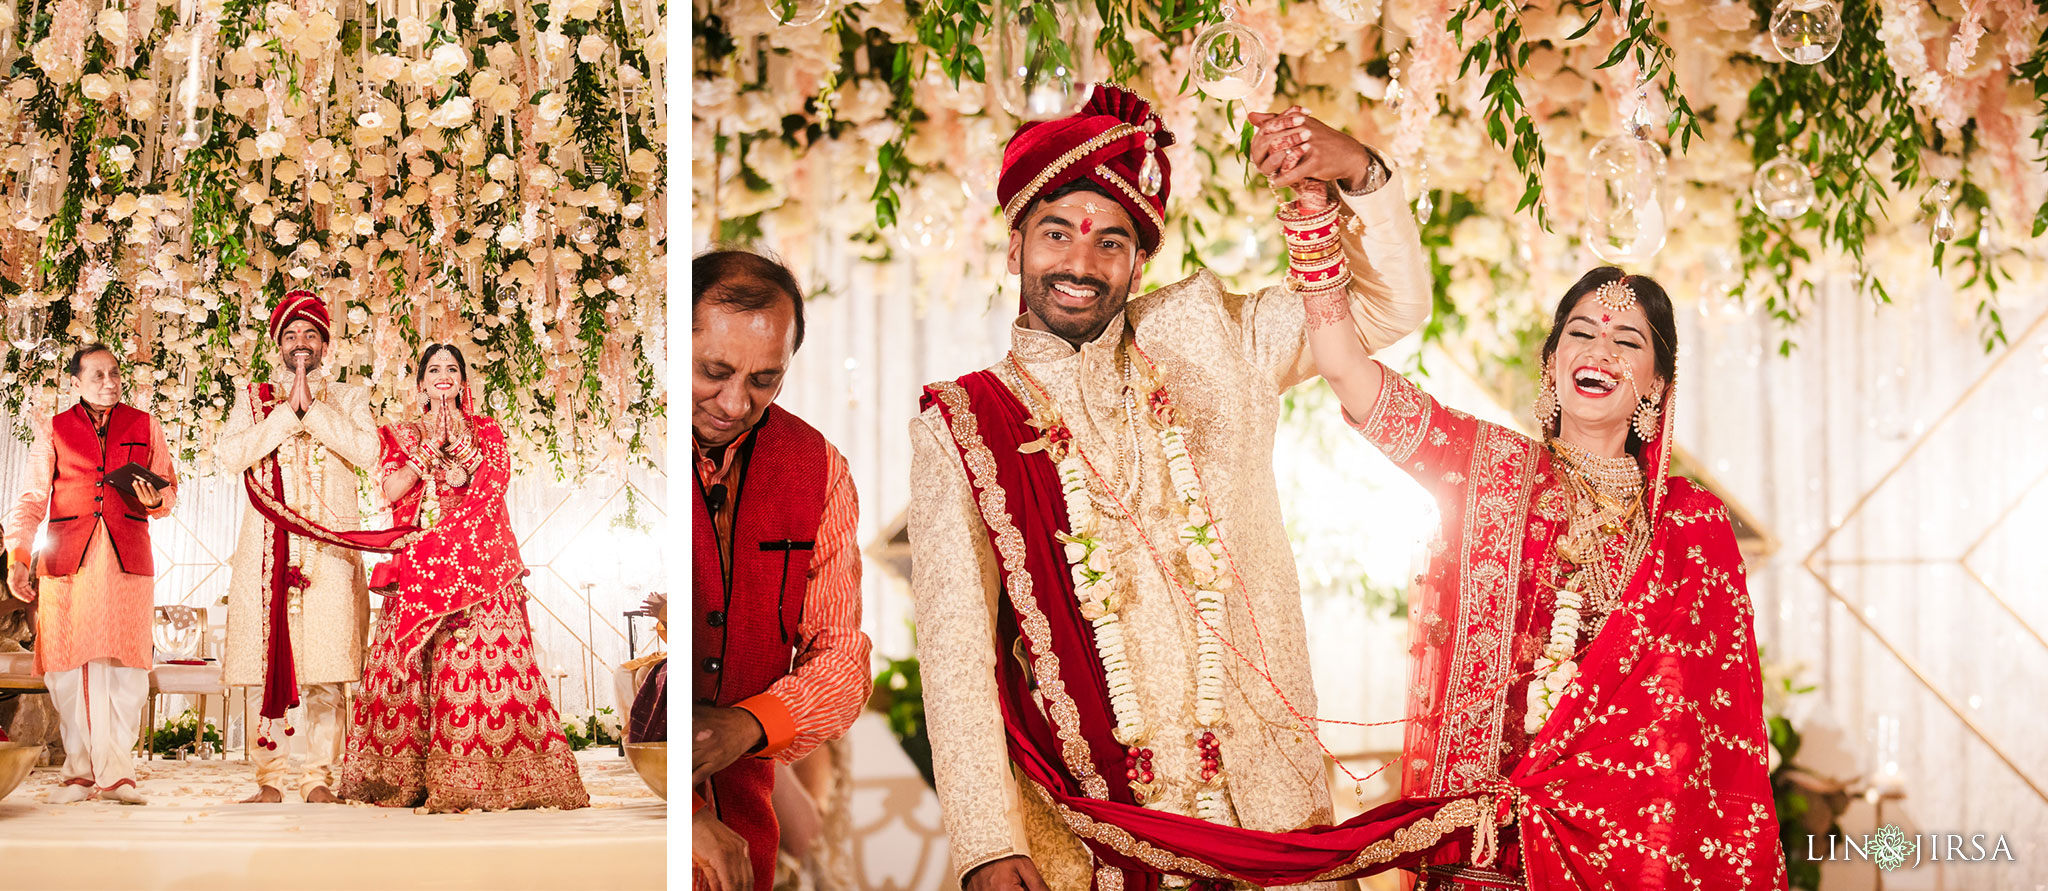 018 san jose marriott indian wedding photography